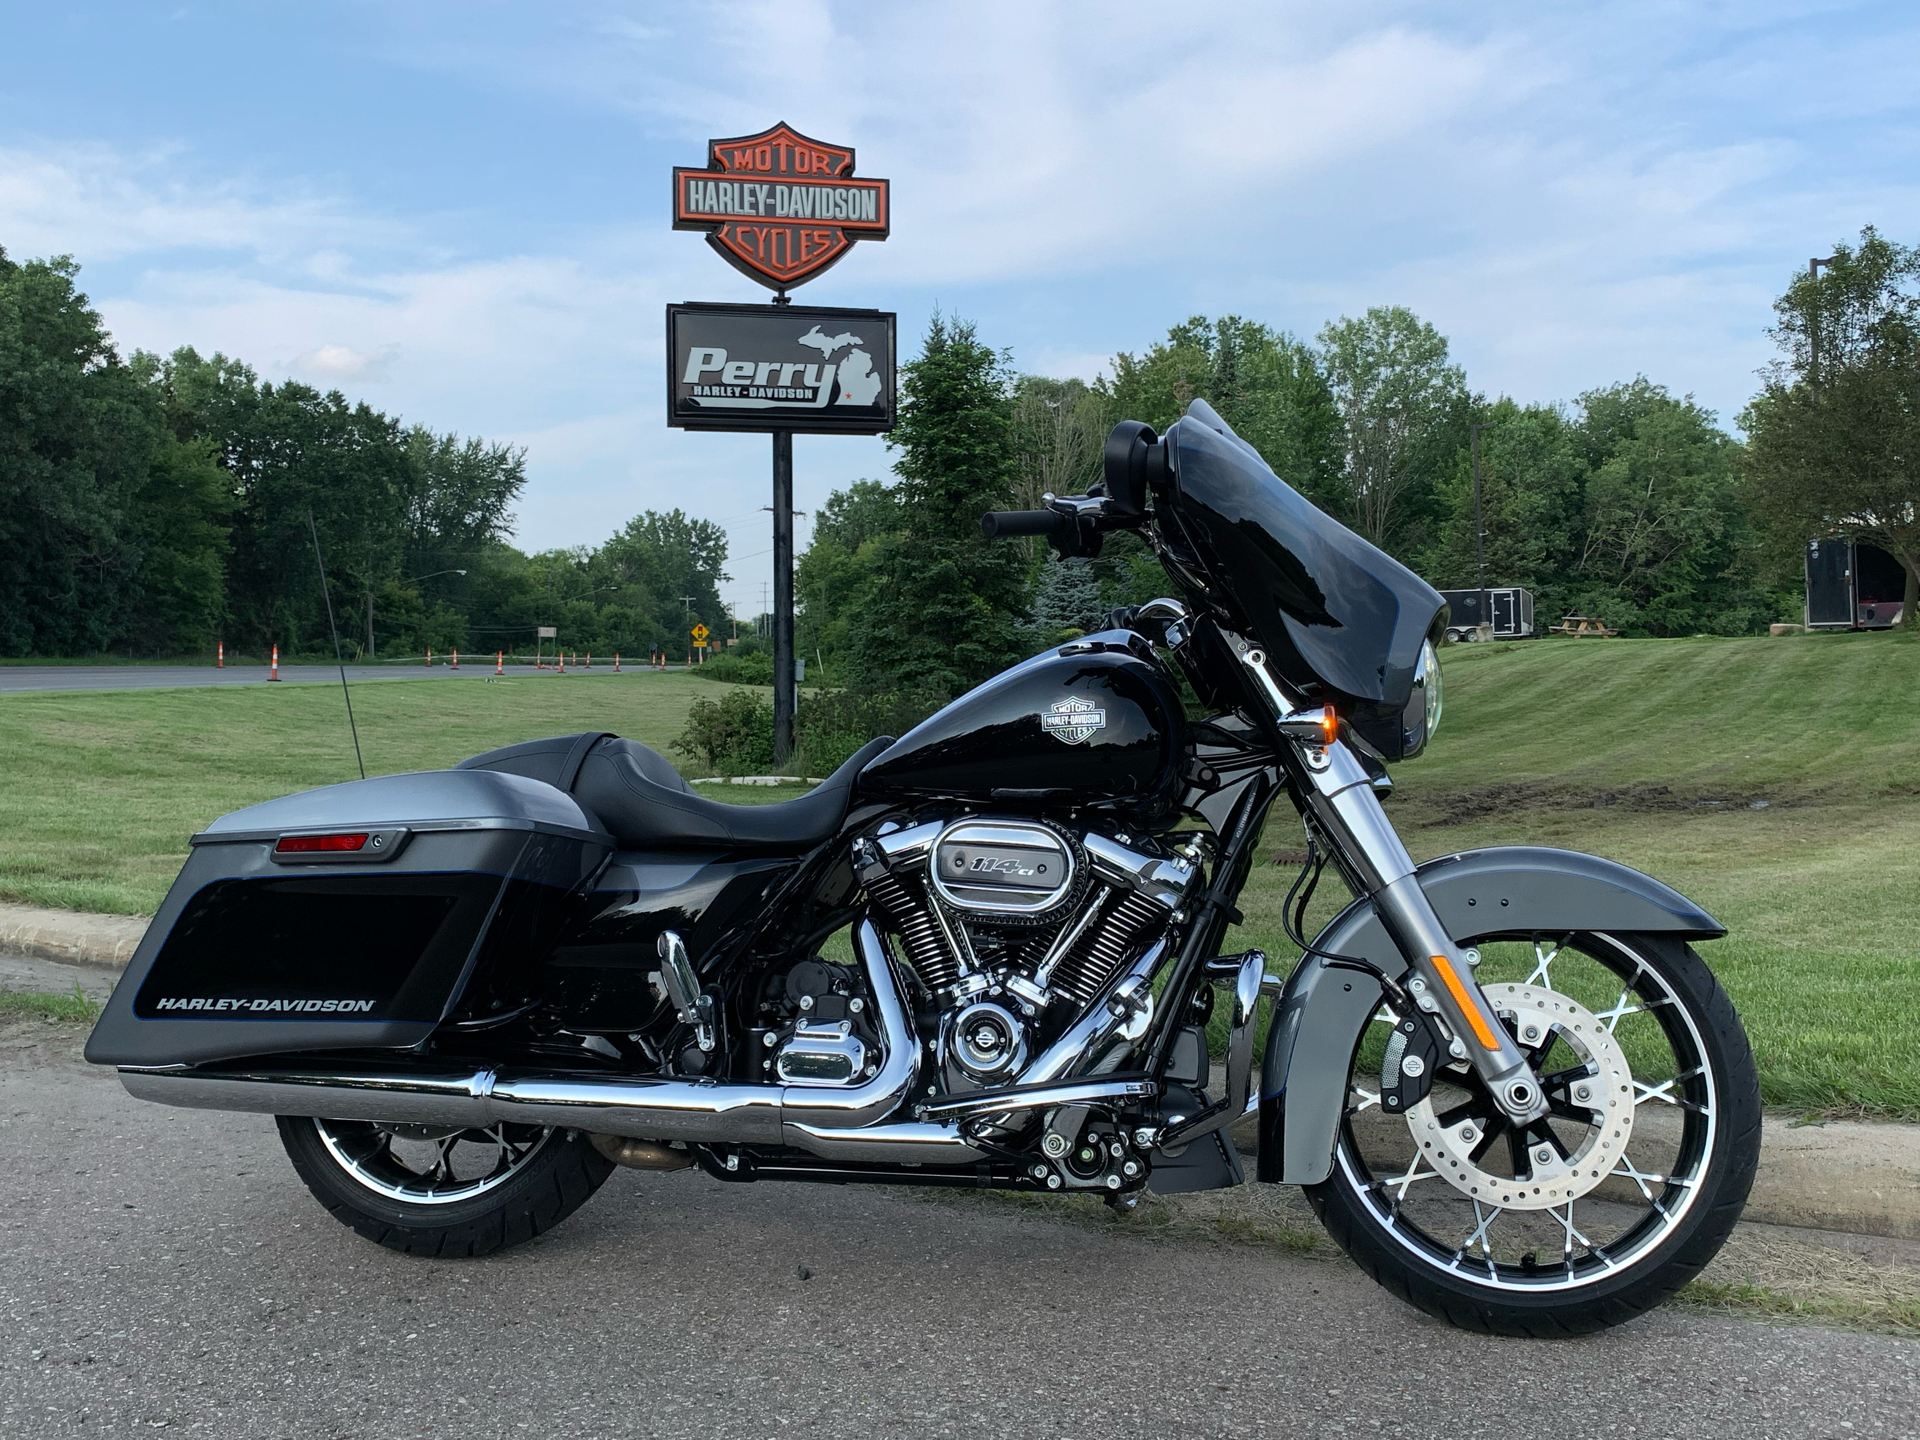 New 2021 Harley Davidson Street Glide Special Motorcycles In Portage Mi N A Gauntlet Gray Metallic Vivid Black Chrome Option